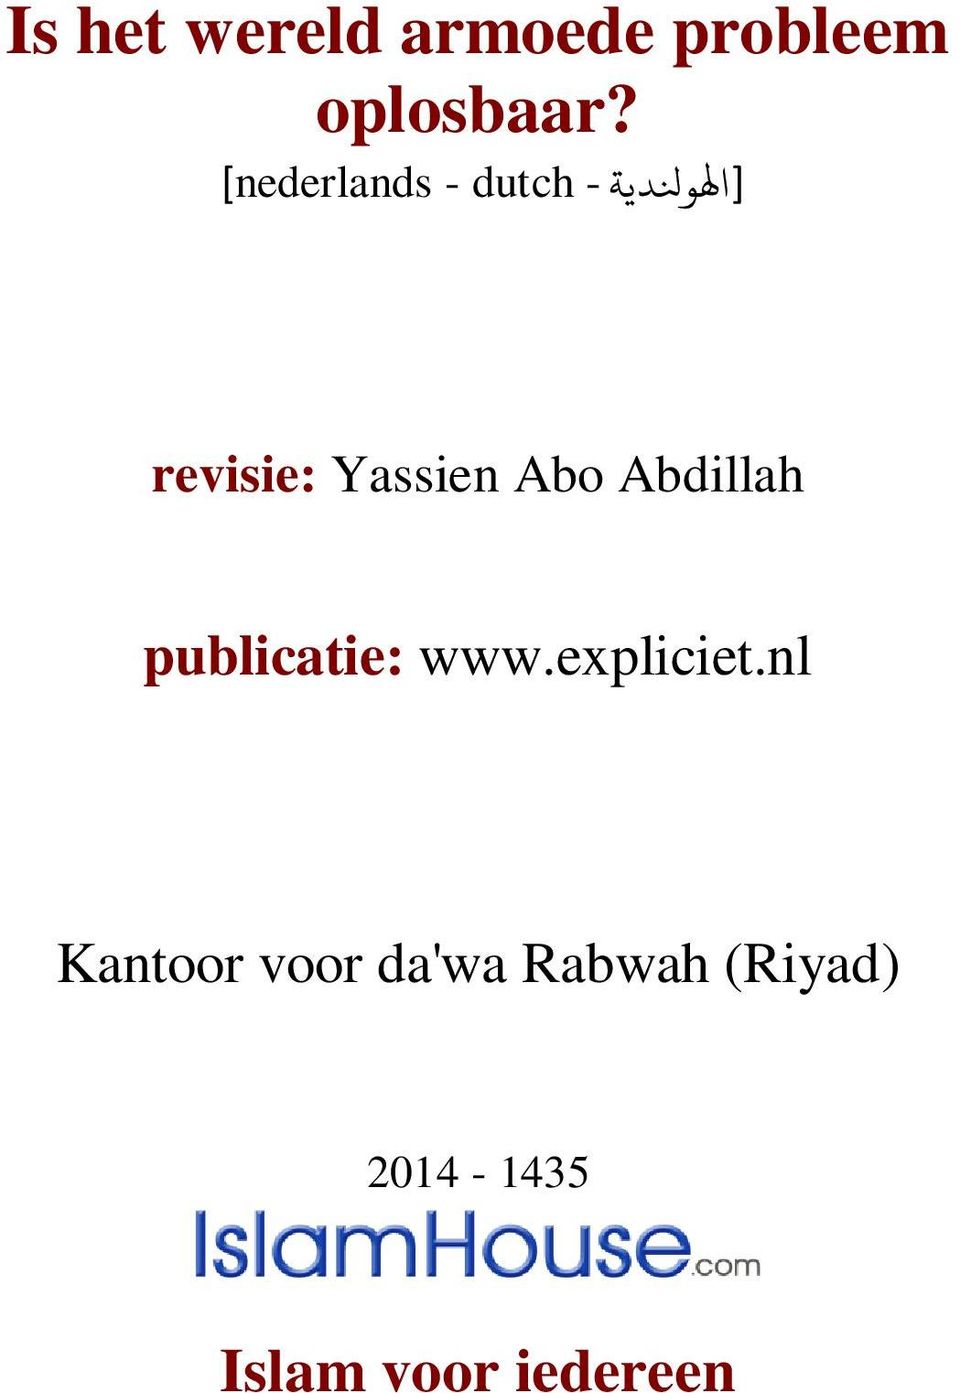 Abo Abdillah publicatie: www.expliciet.